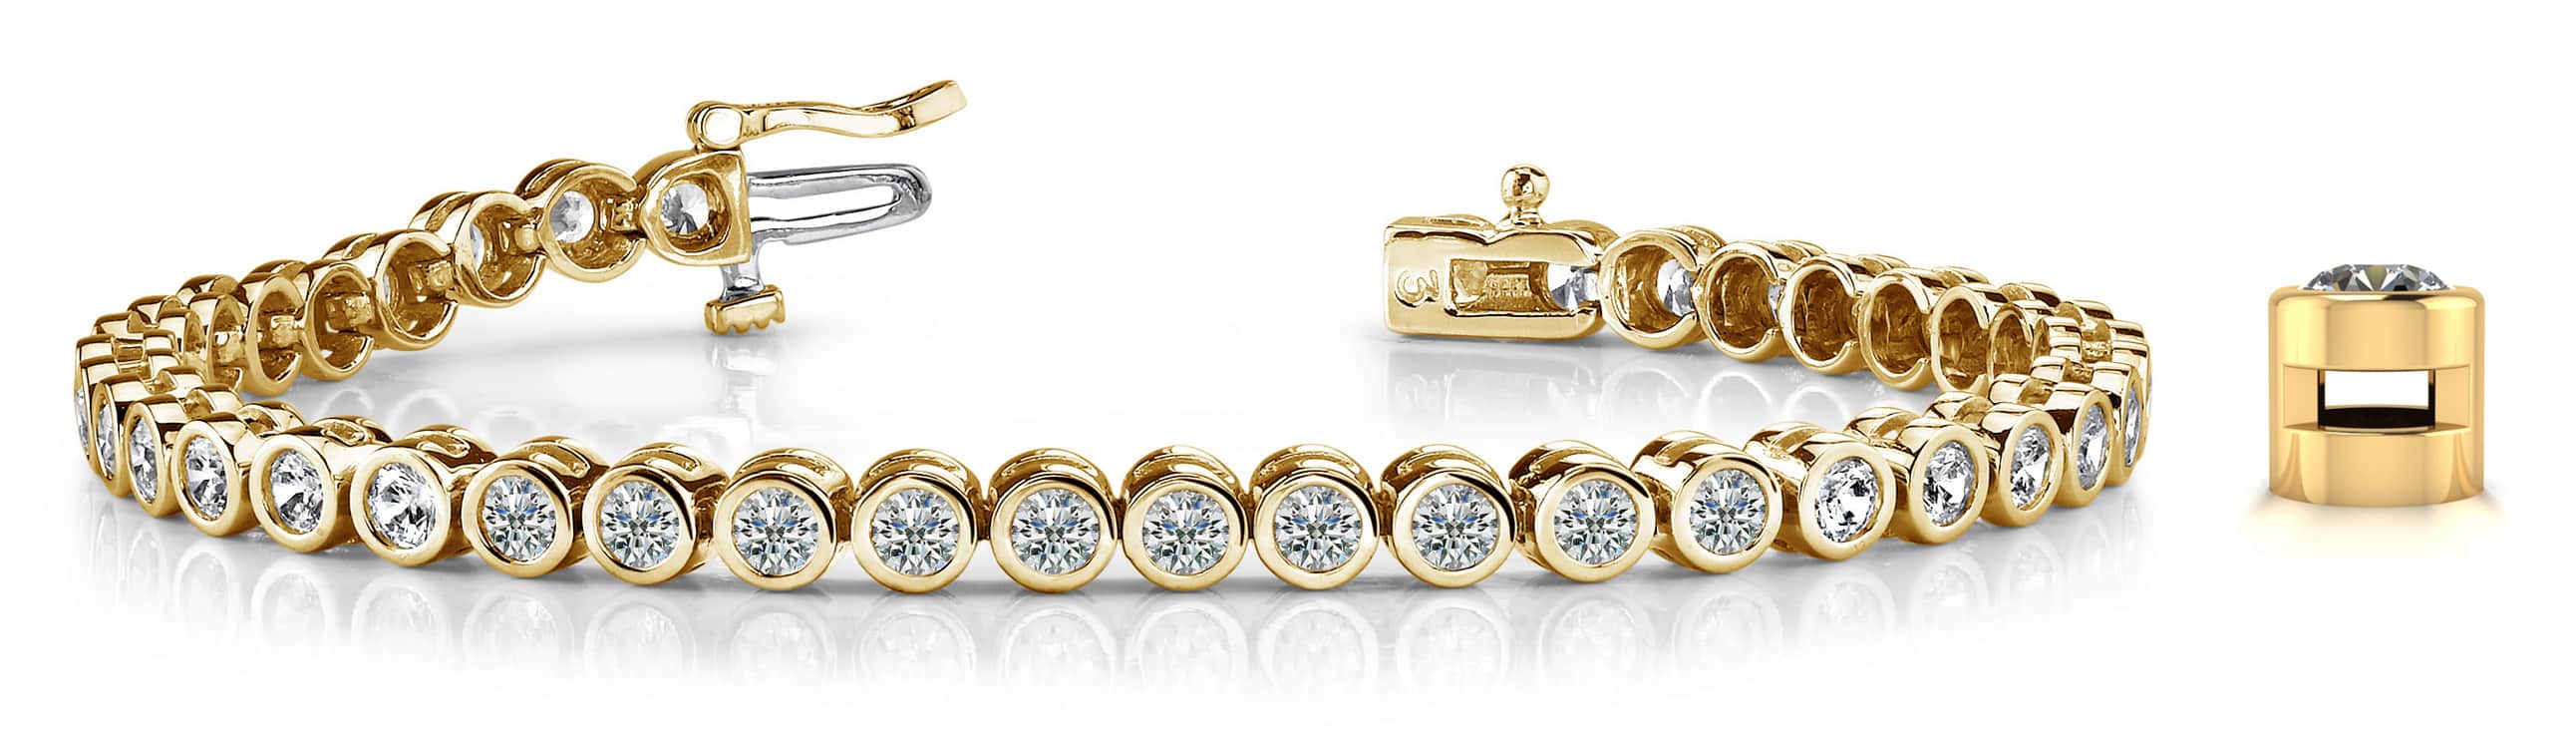 Classic Round Bezel Set Diamond Tennis Bracelet Available In Platinum Or Gold